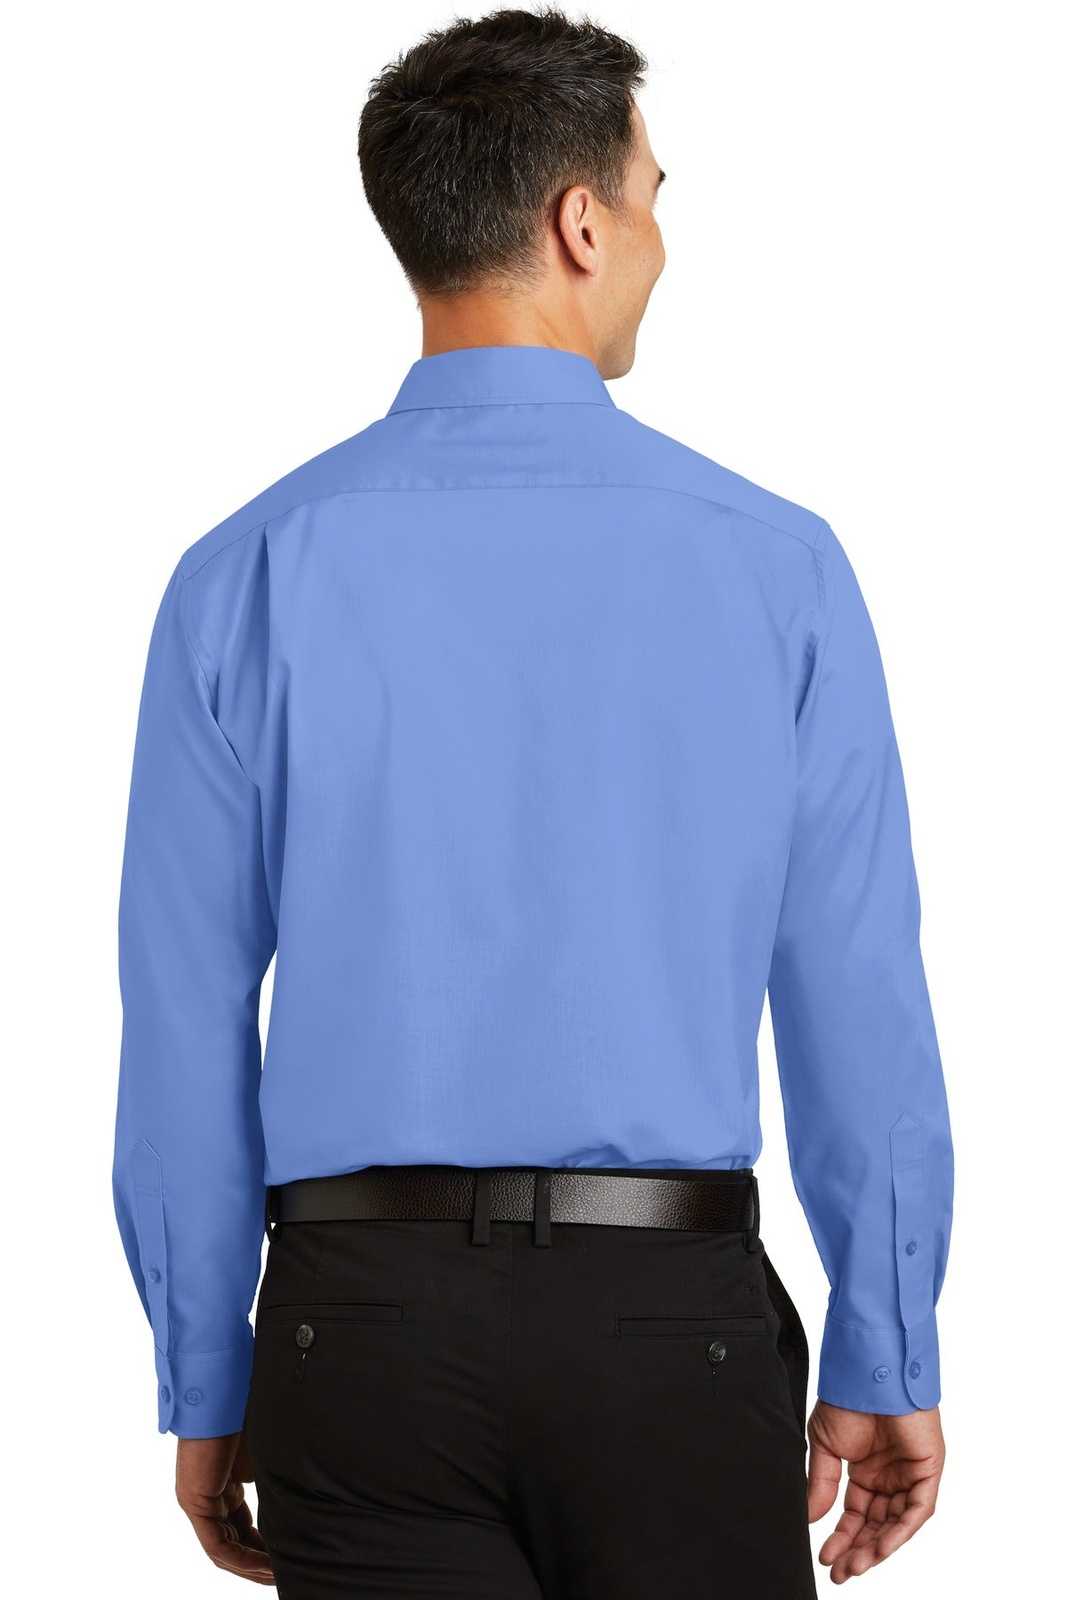 Port Authority S663 Superpro Twill Shirt - Ultramarine Blue - HIT a Double - 2